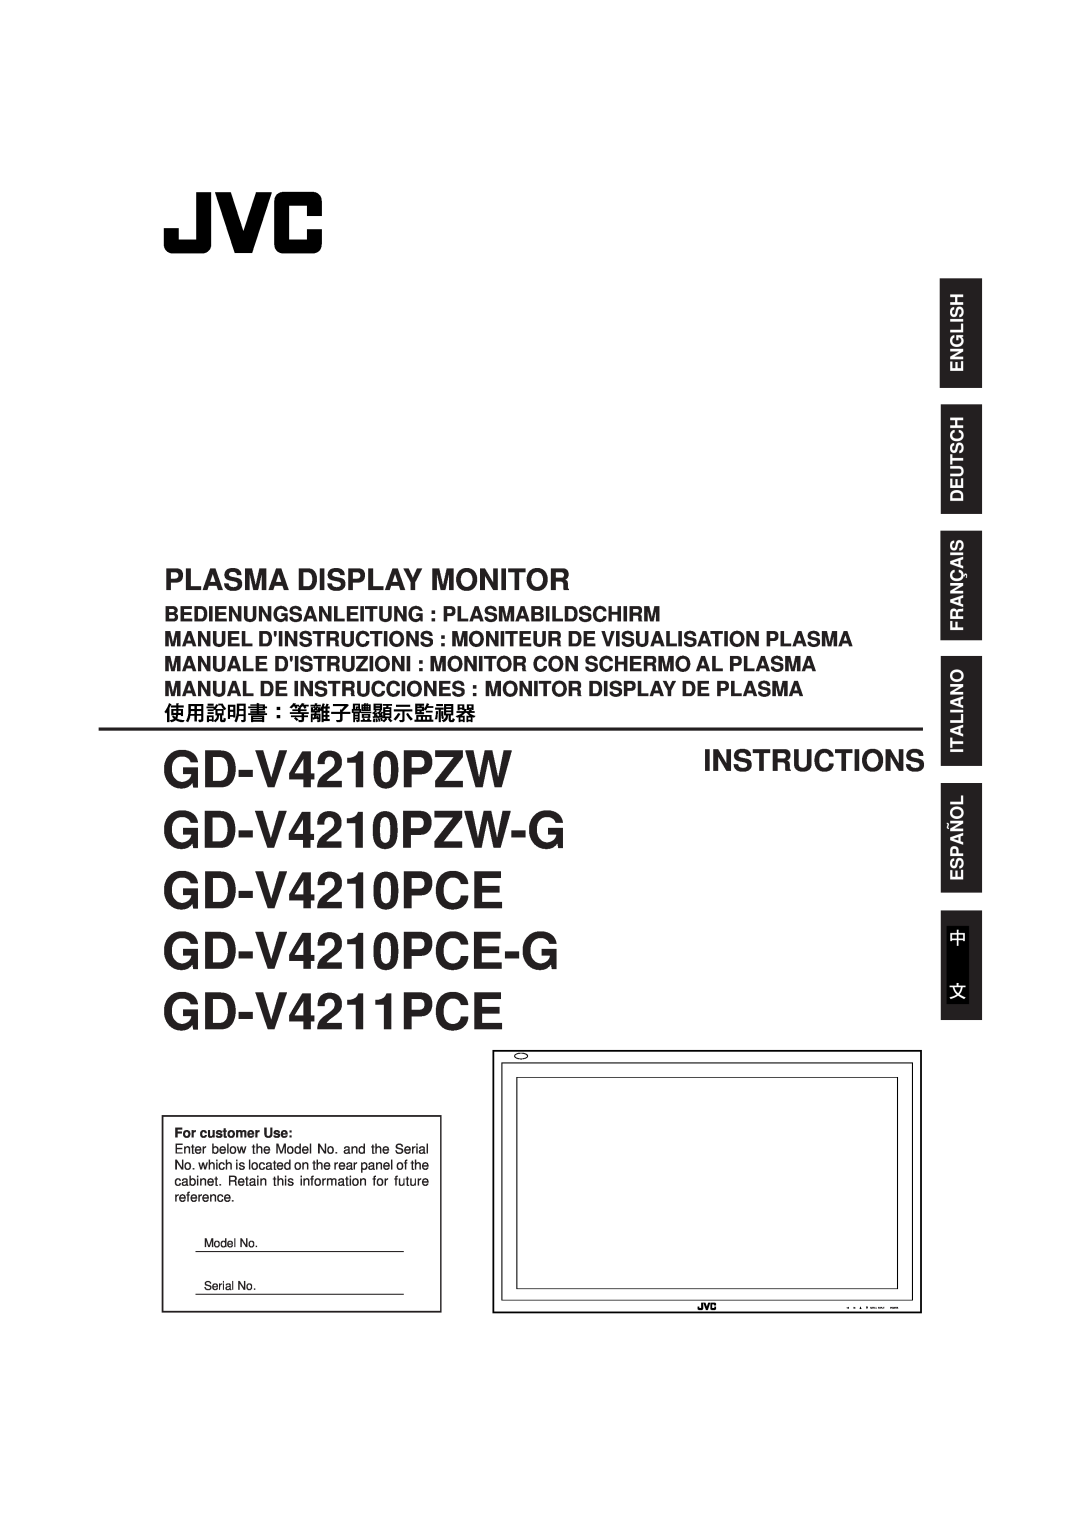 JVC Model No Serial No, GD-V4210PZW INSTRUCTIONS GD-V4210PZW-G GD-V4210PCE GD-V4210PCE-G, GD-V4211PCE, For customer Use 